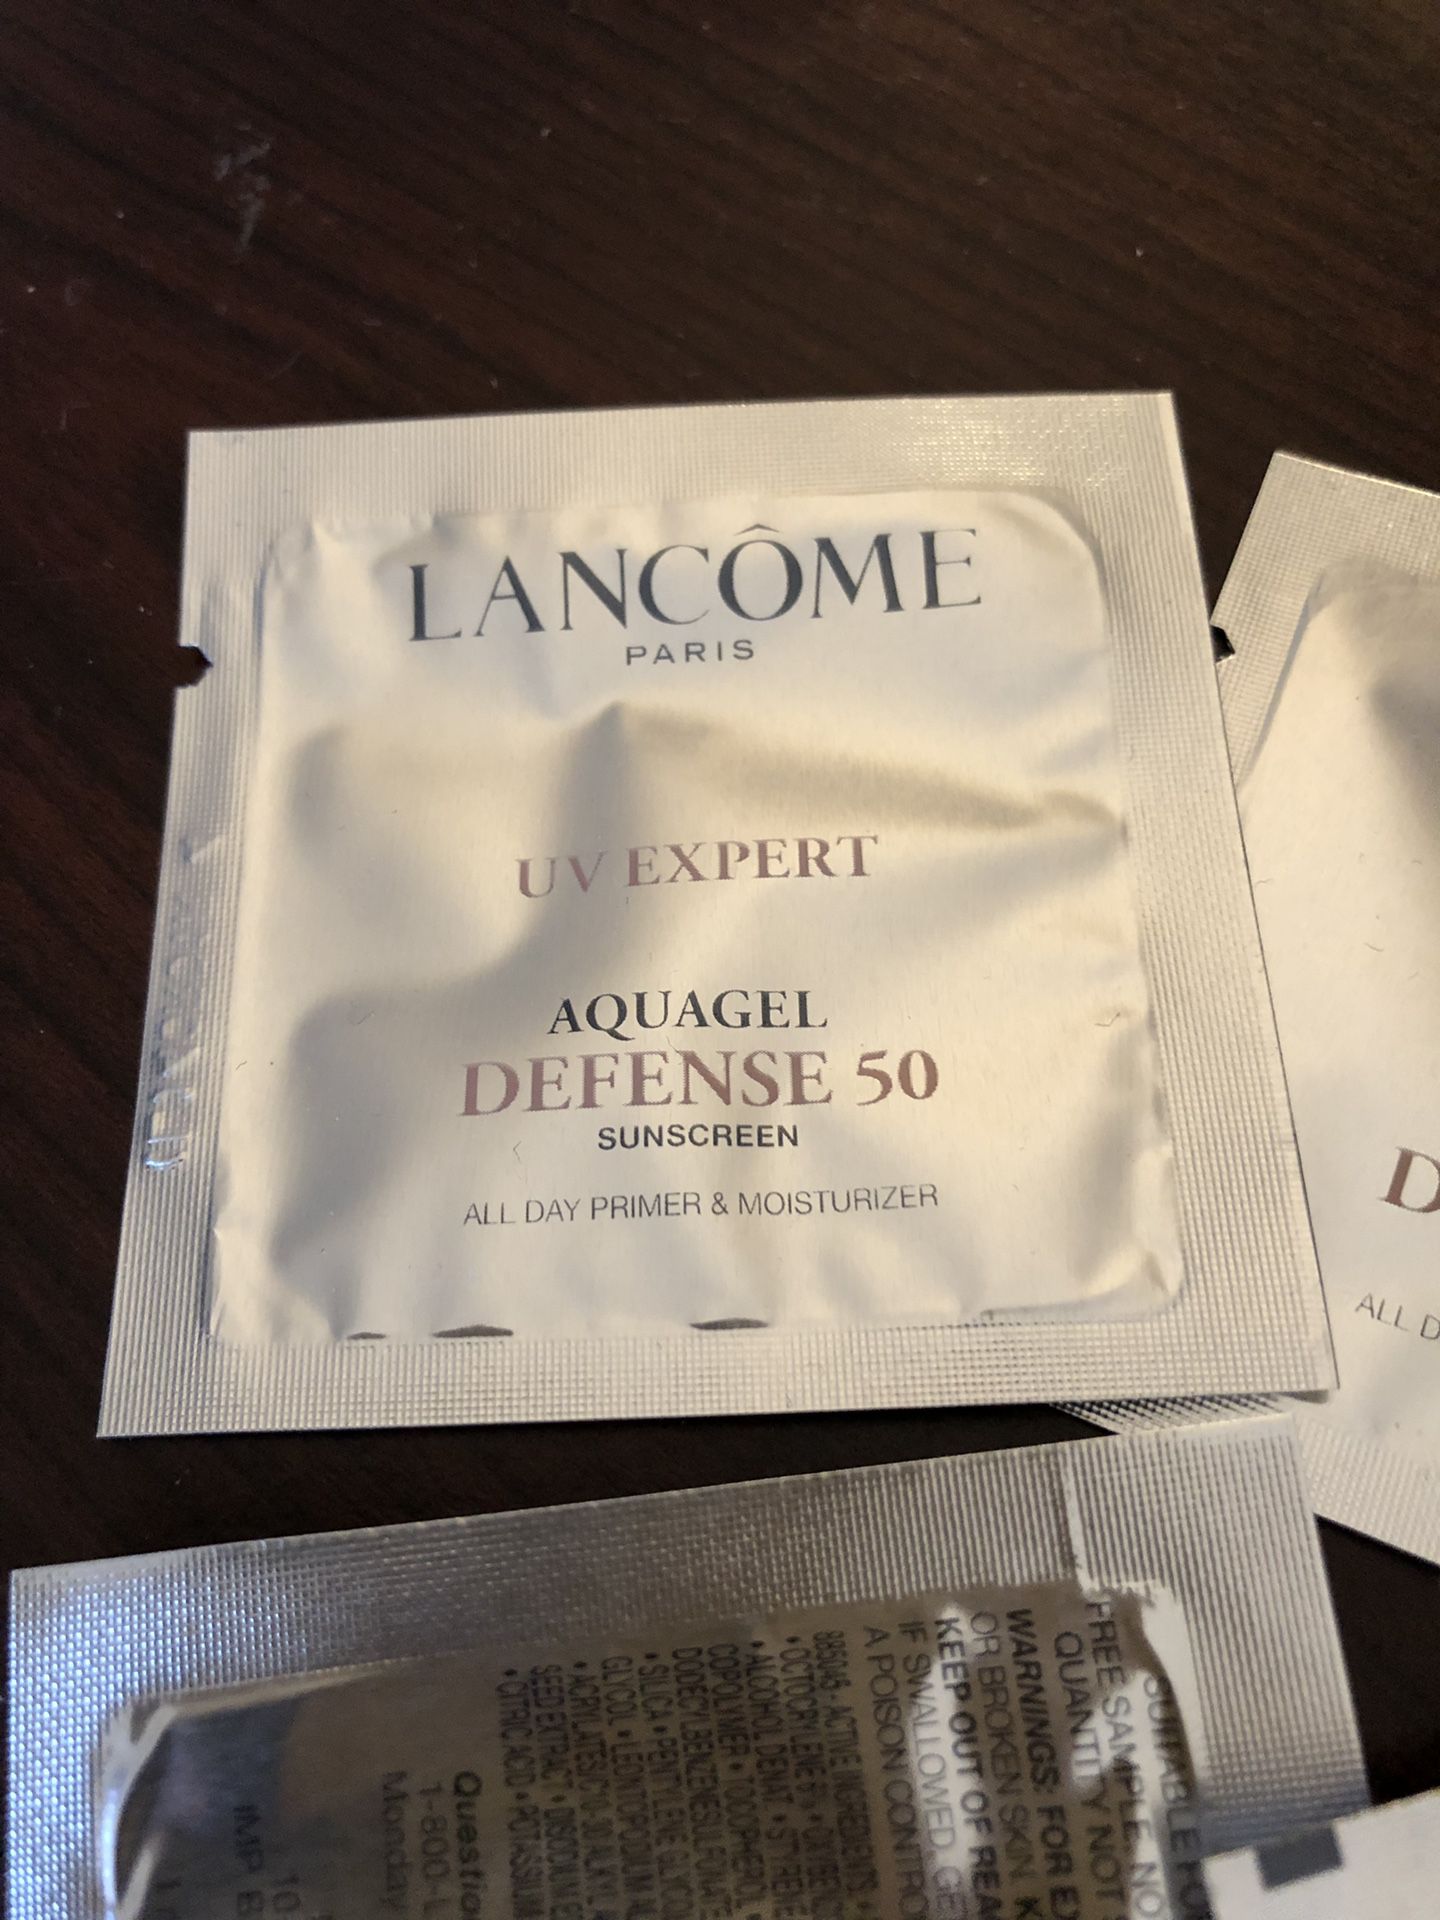 Lancome UV Expert Aquagel Defense 50